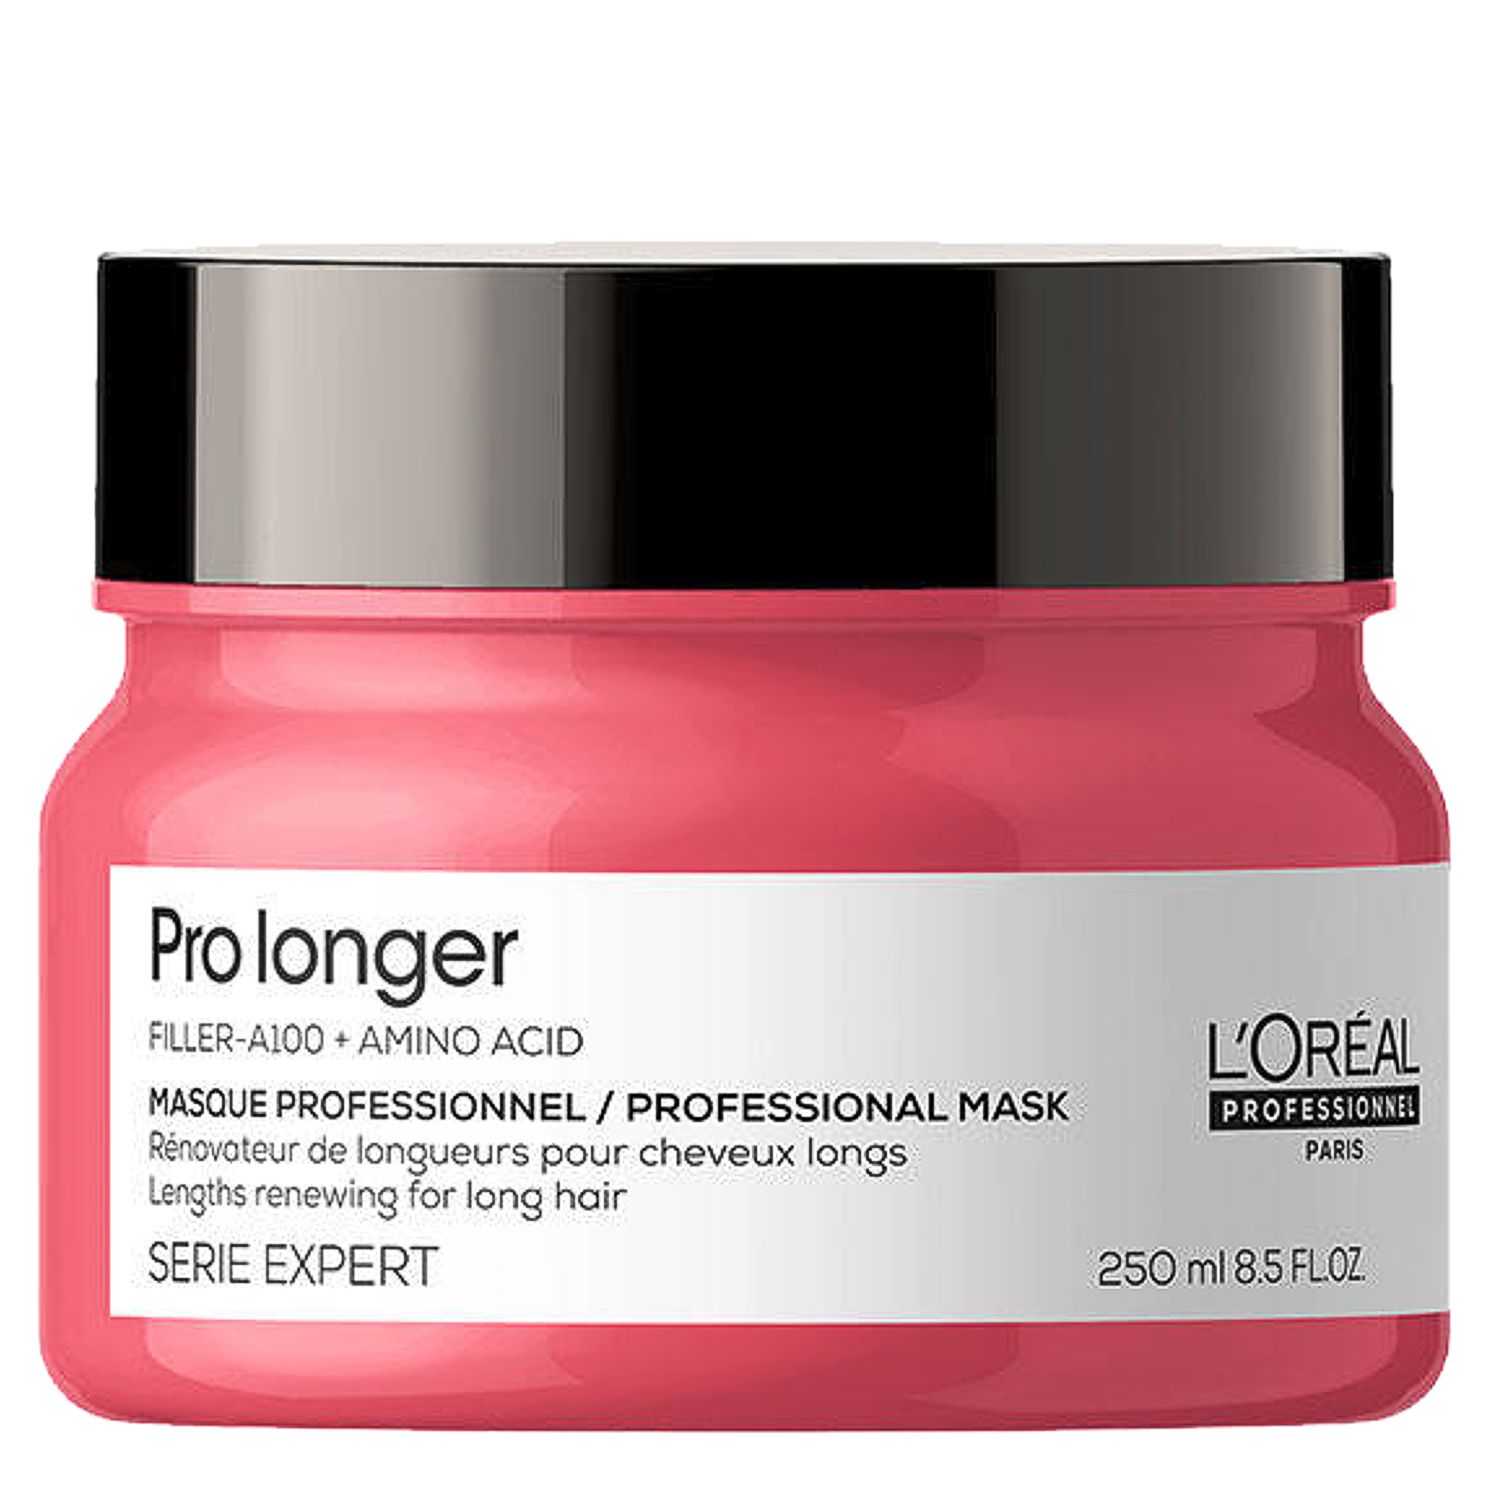 L'Oréal Expert PRO LONGER Professional Mask 250 ml